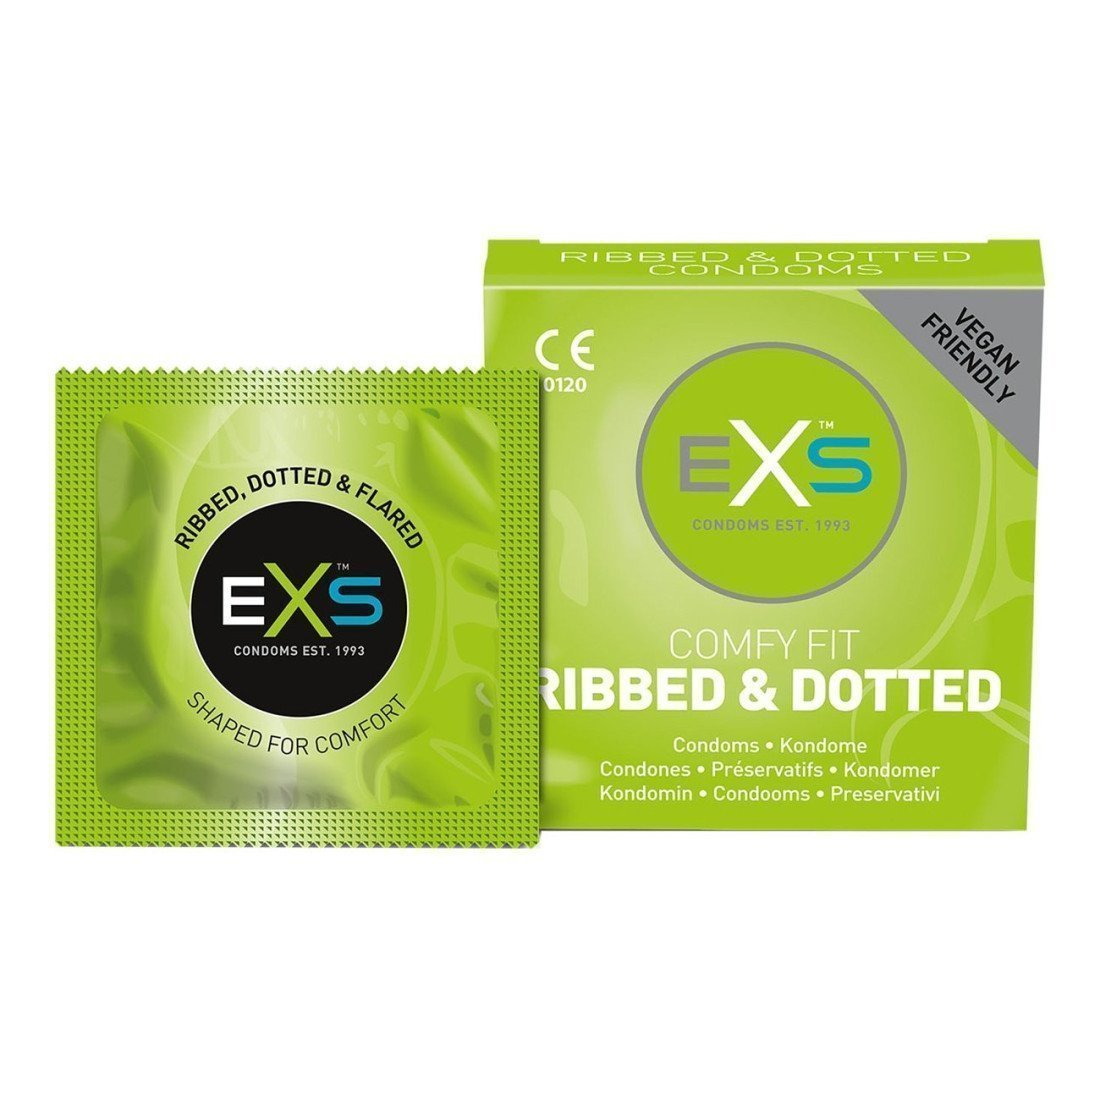 Stimuliuojantys prezervatyvai „Ribbed & Dotted“, 3 vnt. - EXS Condoms